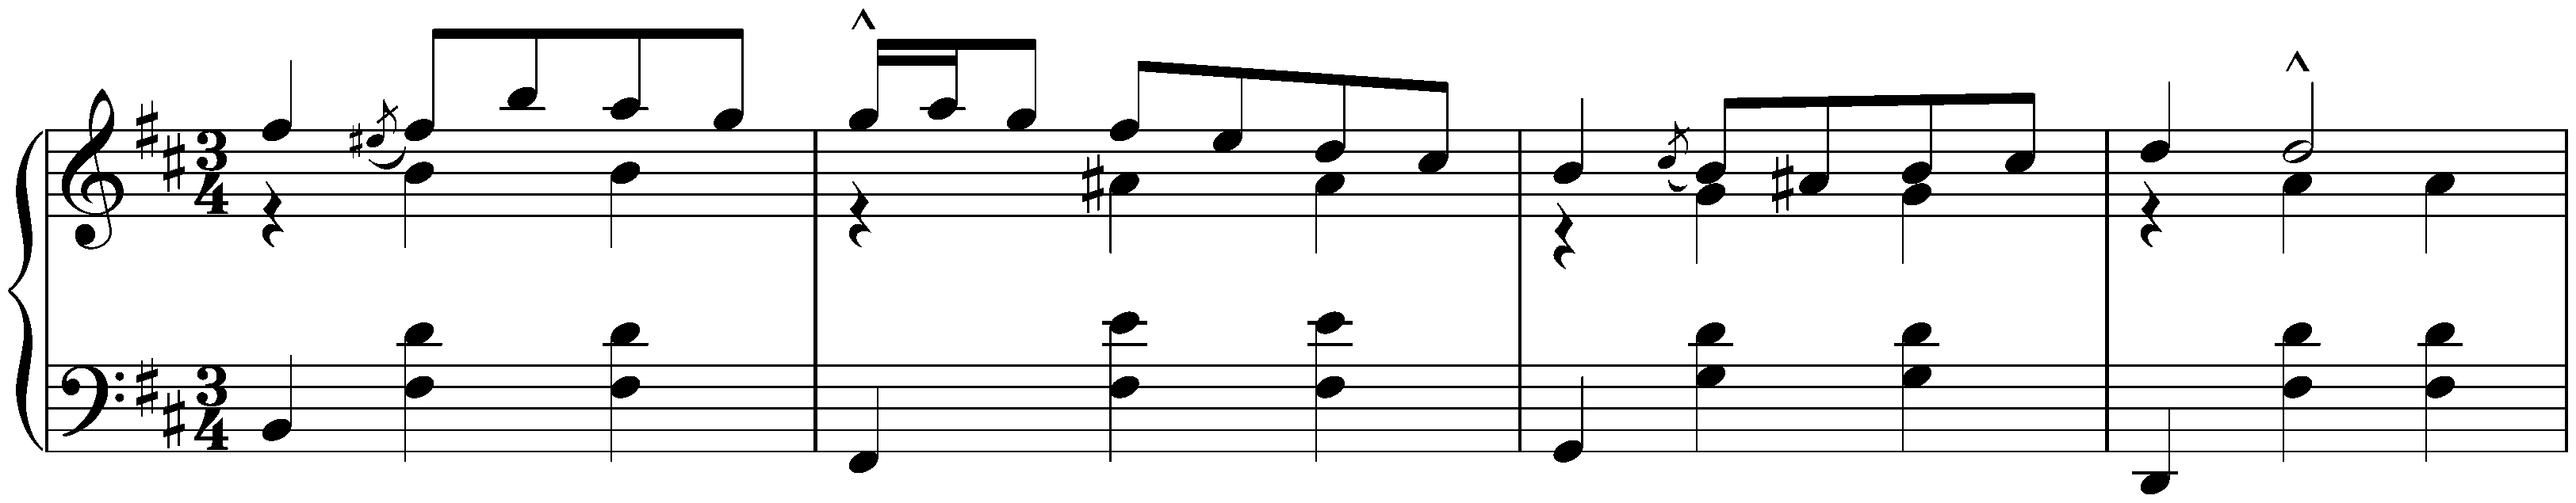 Mazurka in B minor, WoO 15